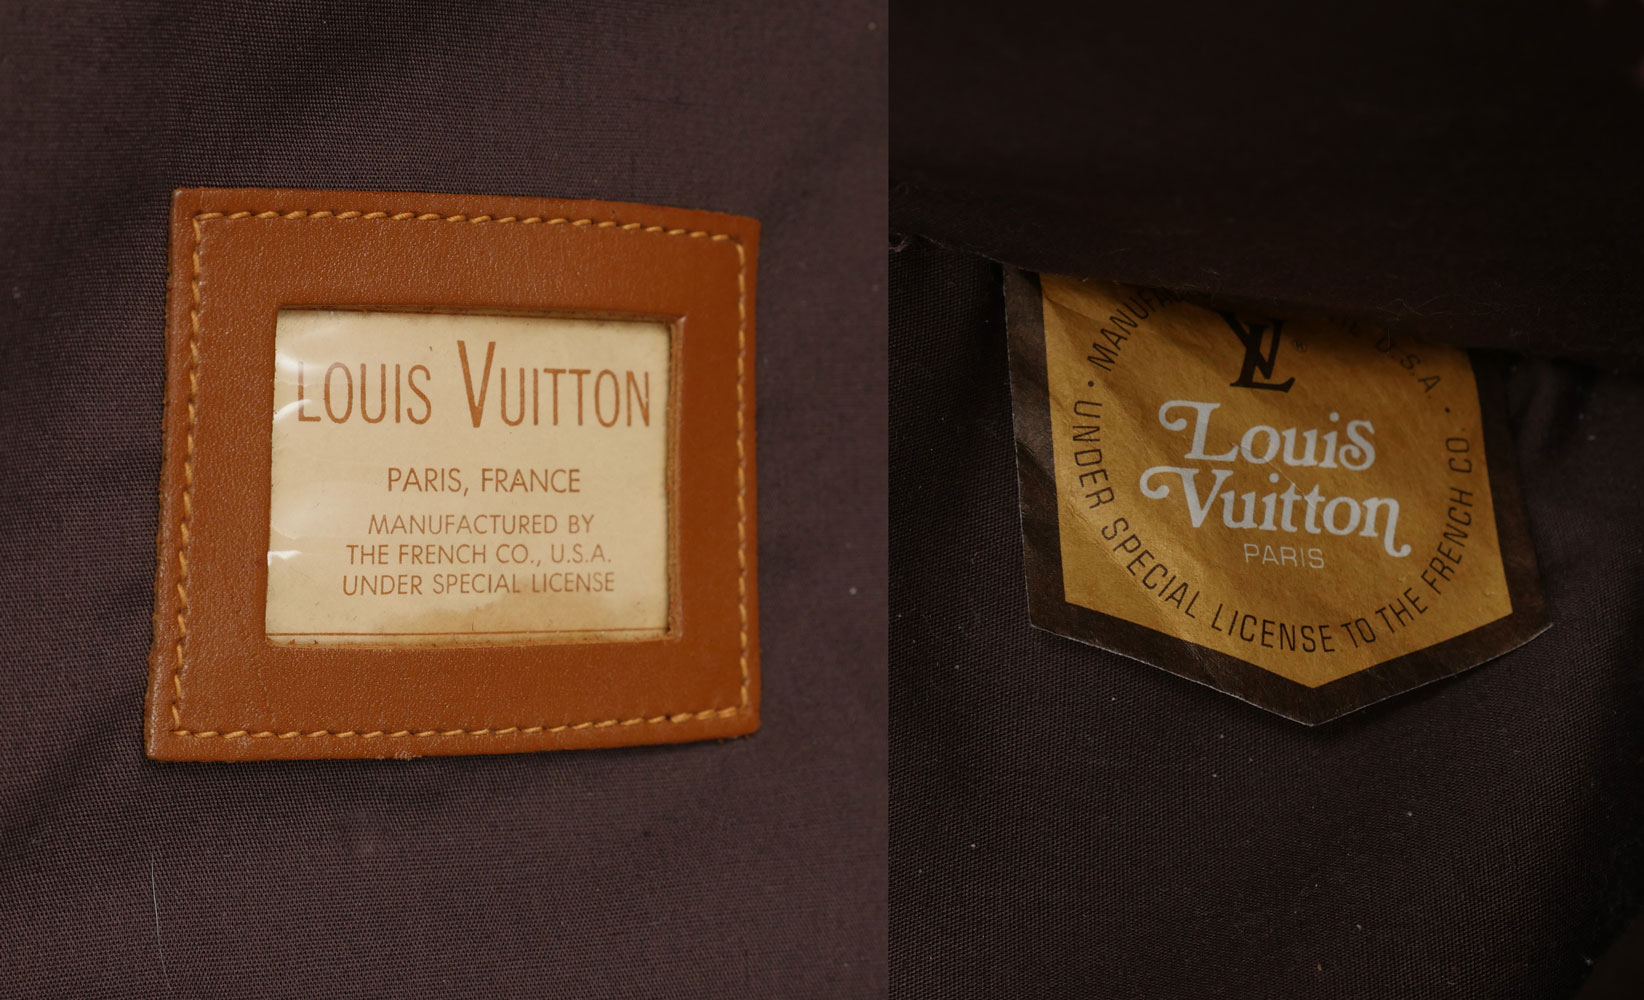 Louis Vuitton wine bottle carrier – Pullman Gallery